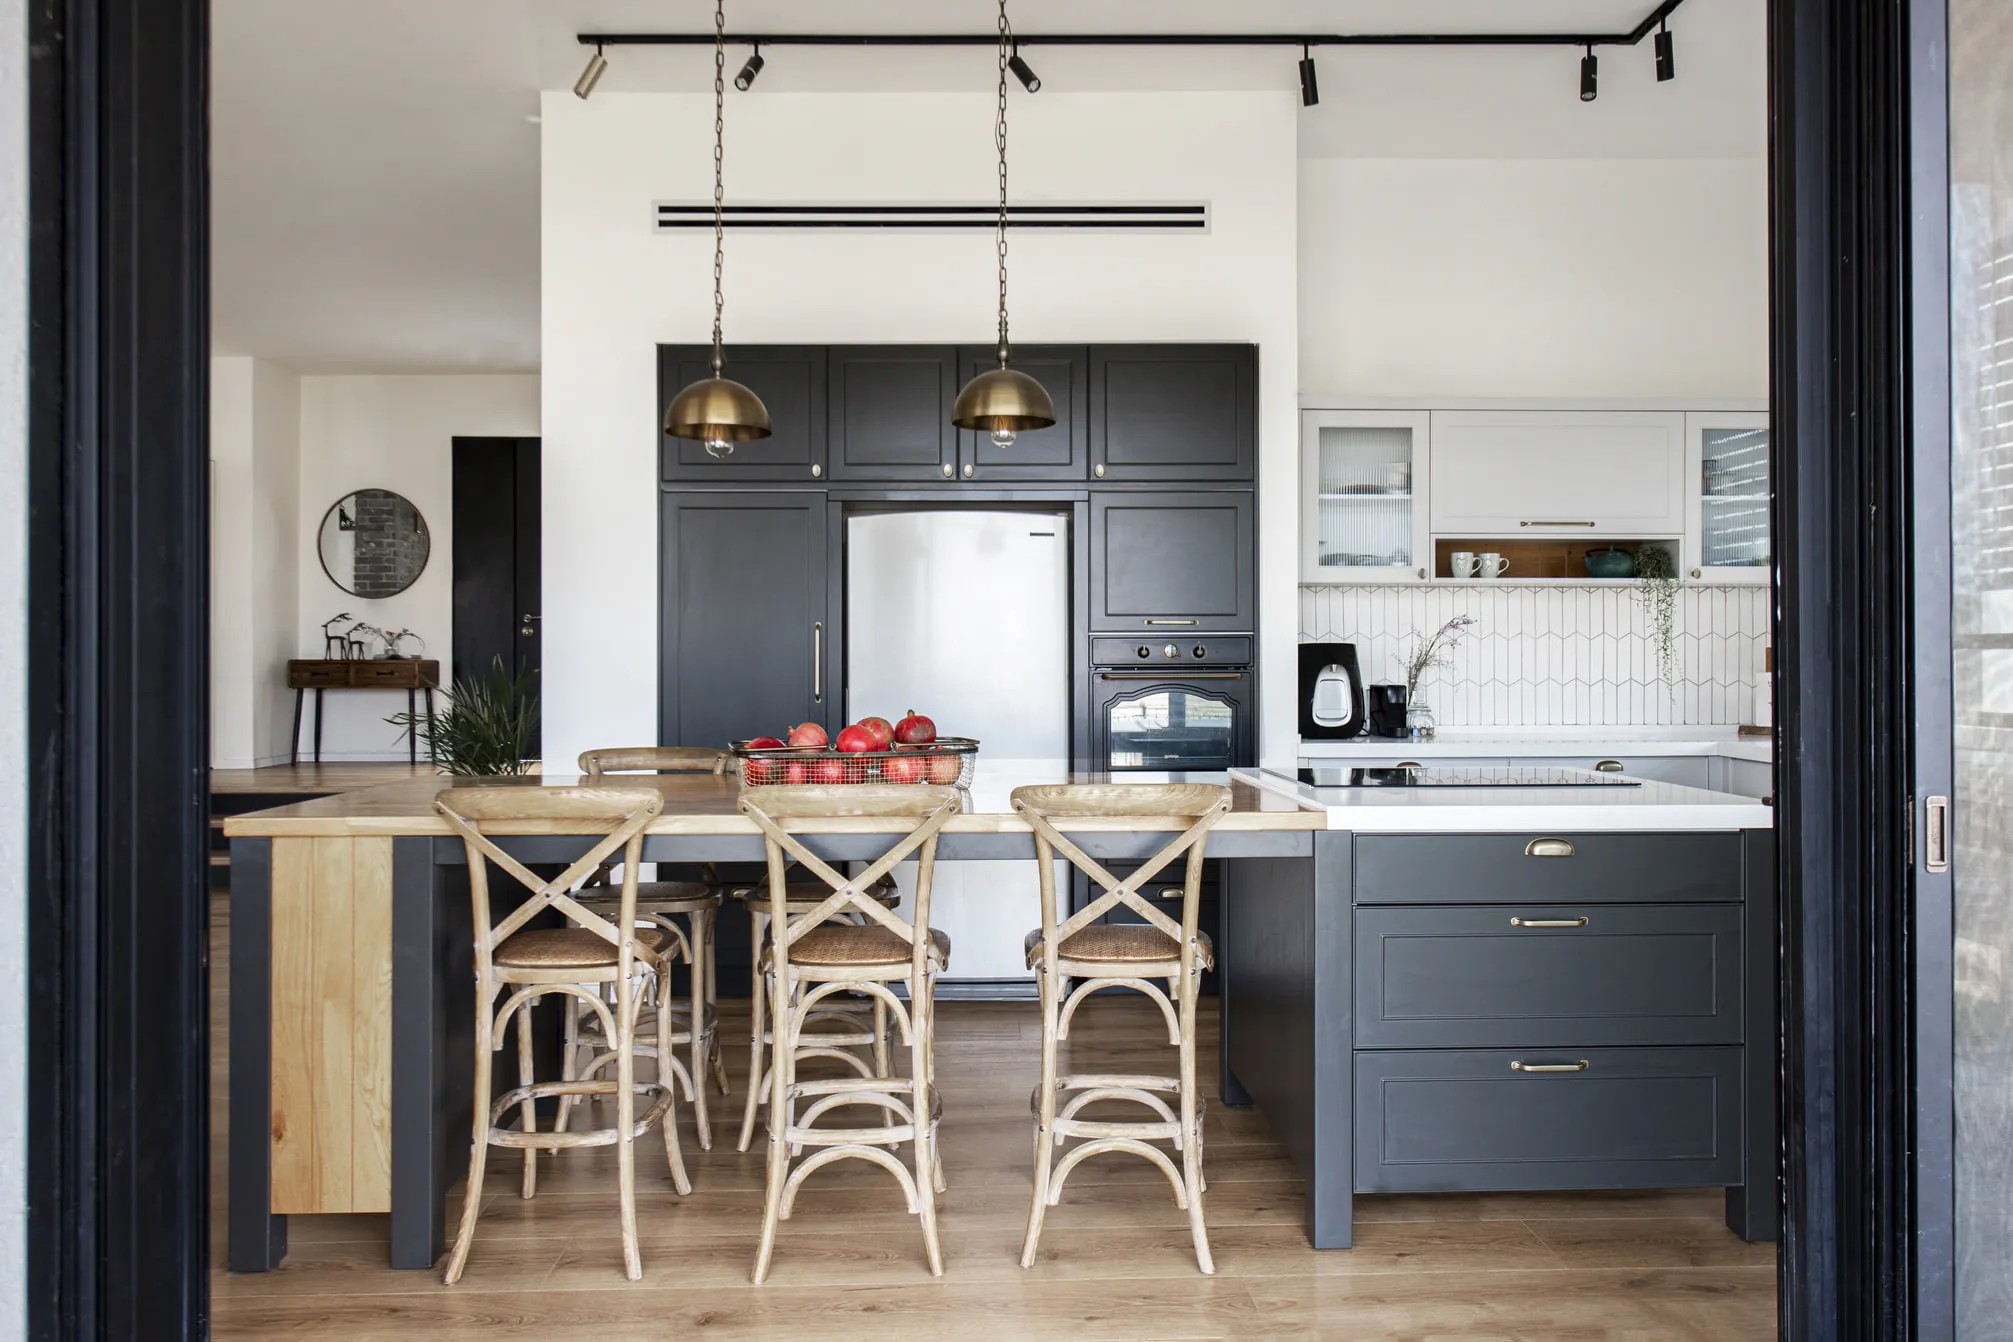 Scottsdale, AZ home remodel - Kitchen island